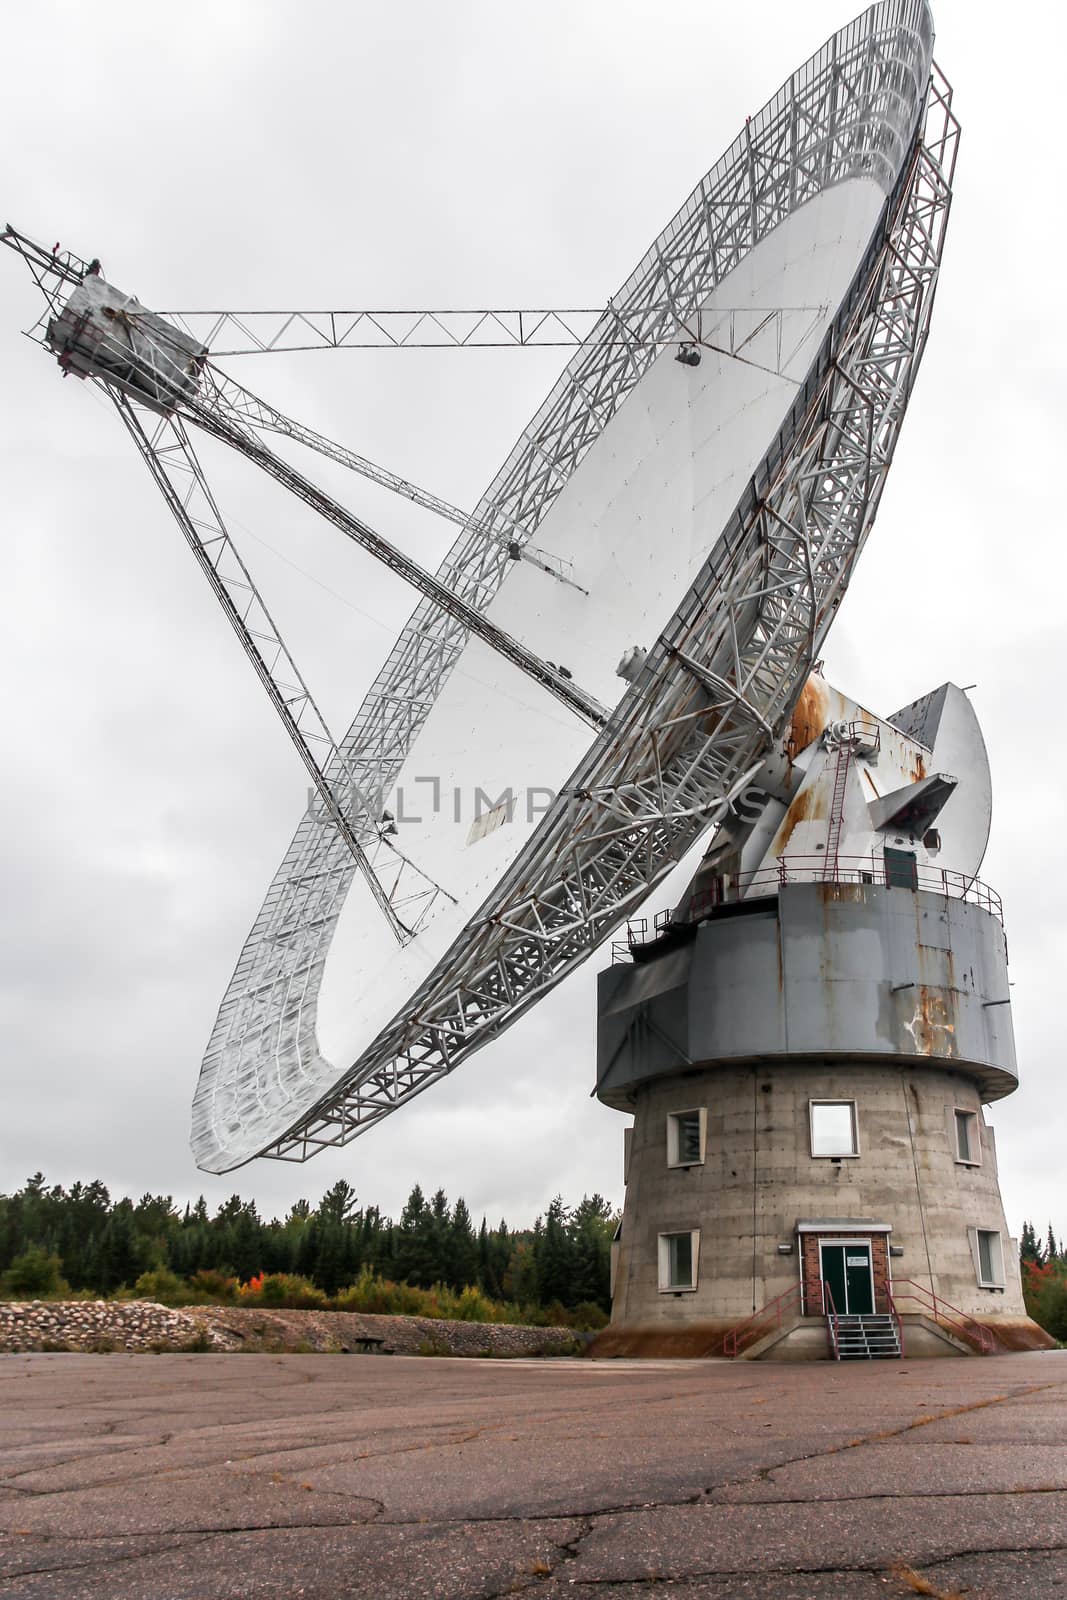 50 meter diameter radiotelescope